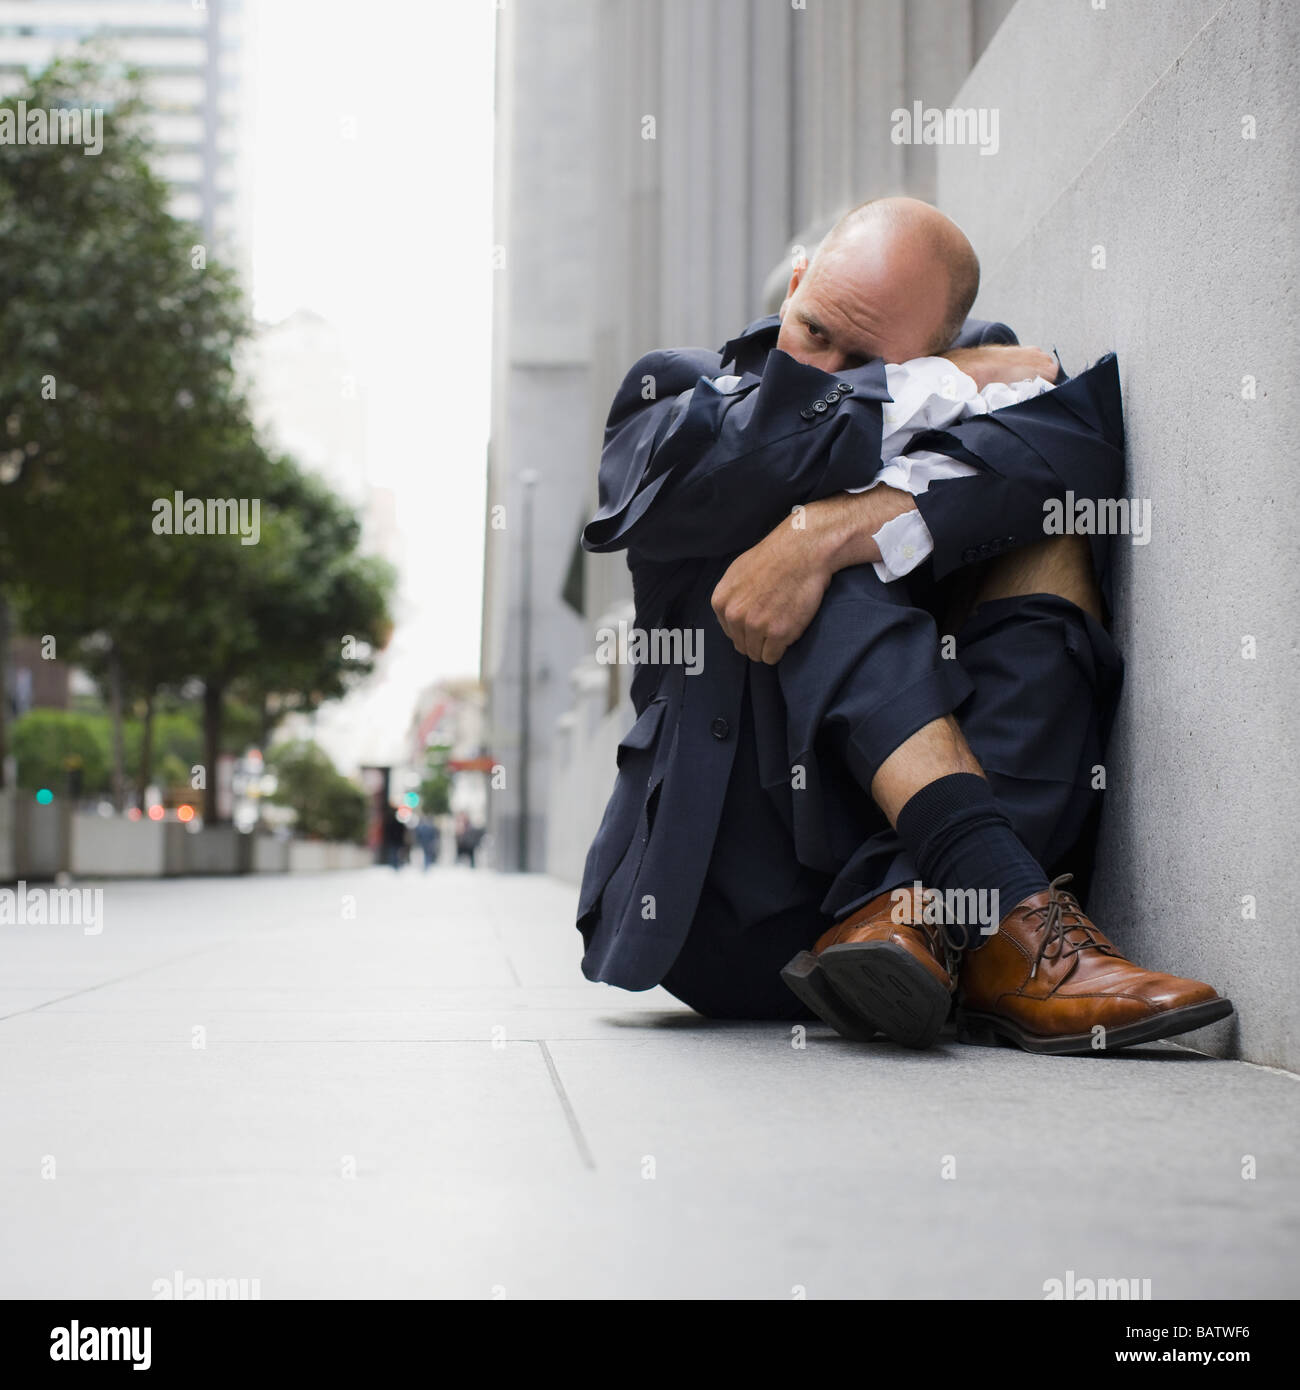 USA, California, San Francisco, Businessman wearing torn clothing, sitting on sidewalk Stock Photo